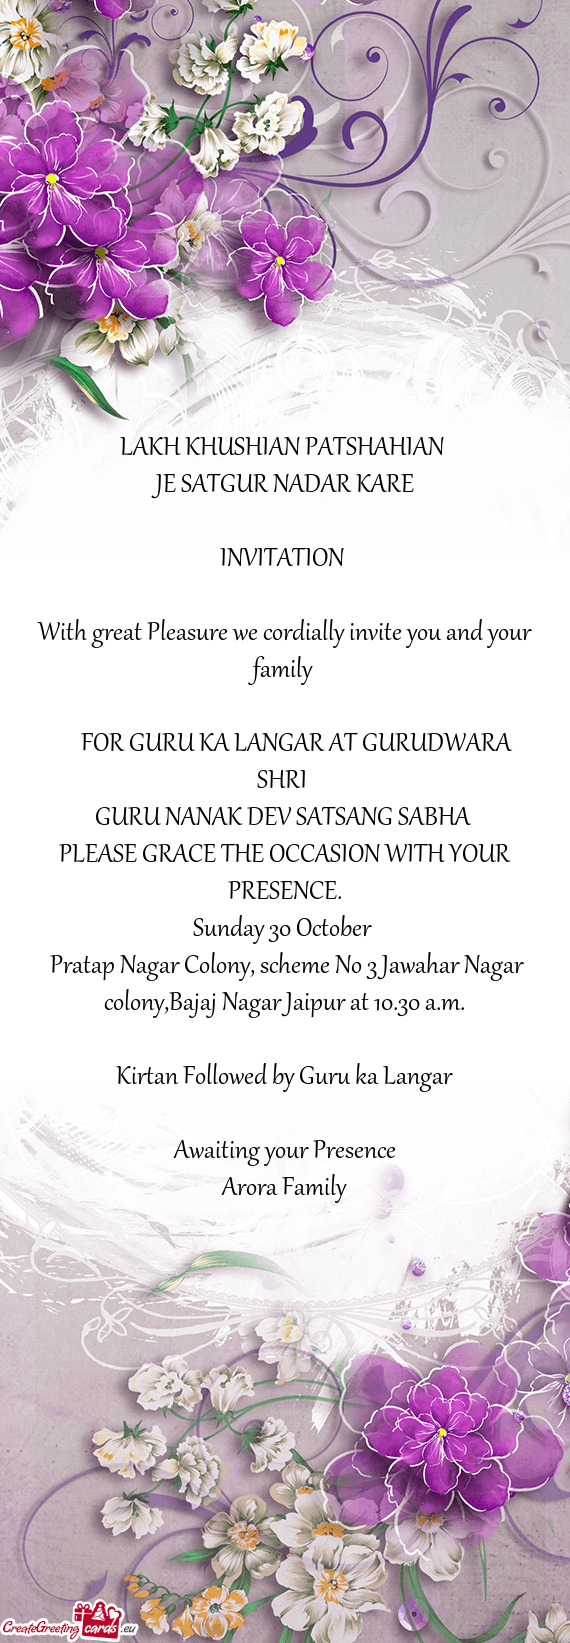 FOR GURU KA LANGAR AT GURUDWARA SHRI